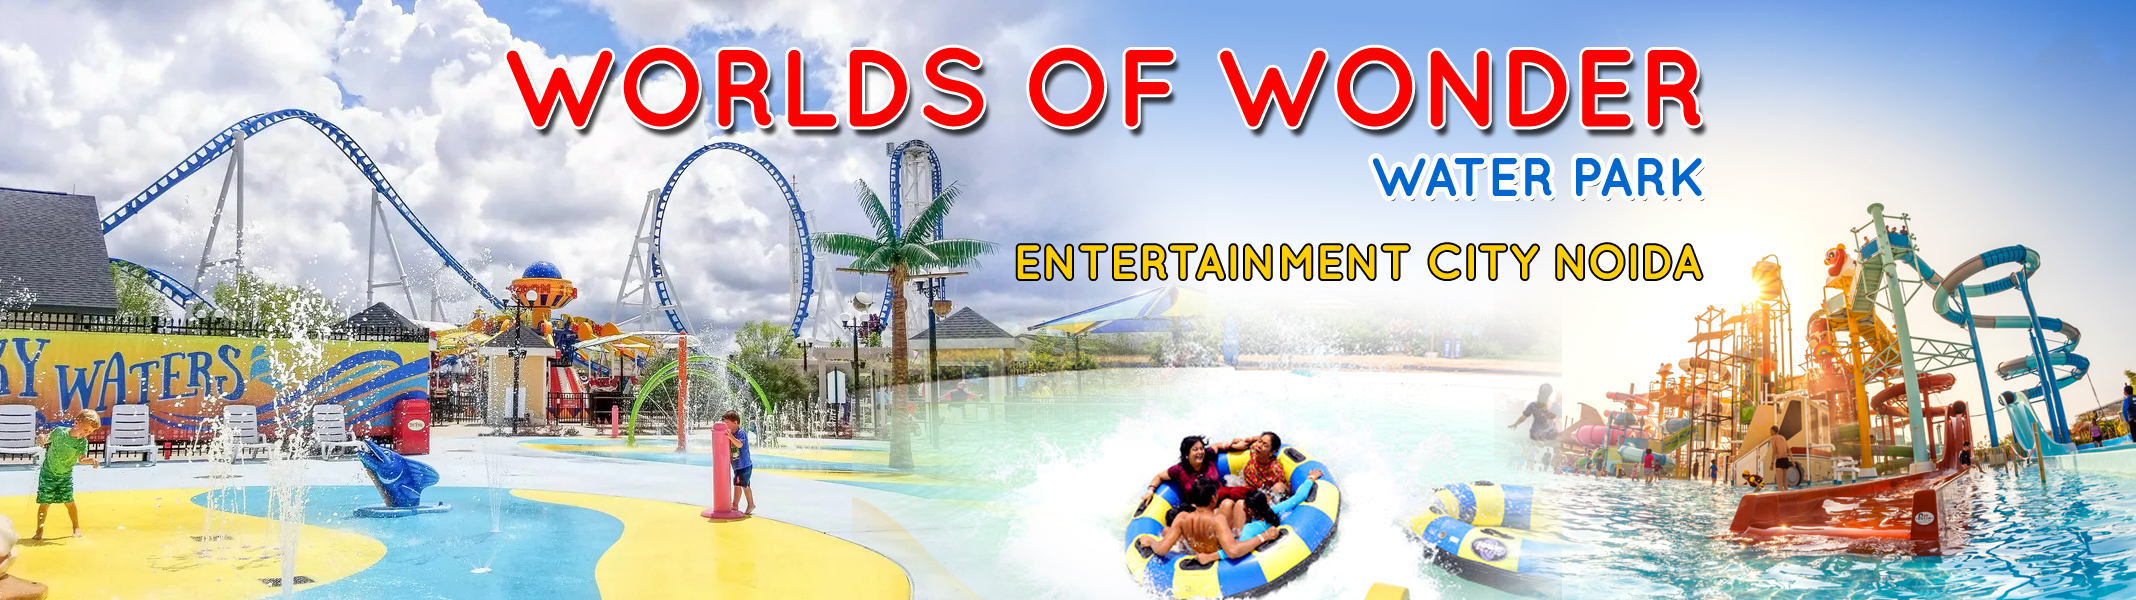 Worlds of Wonder - Banner Promotional